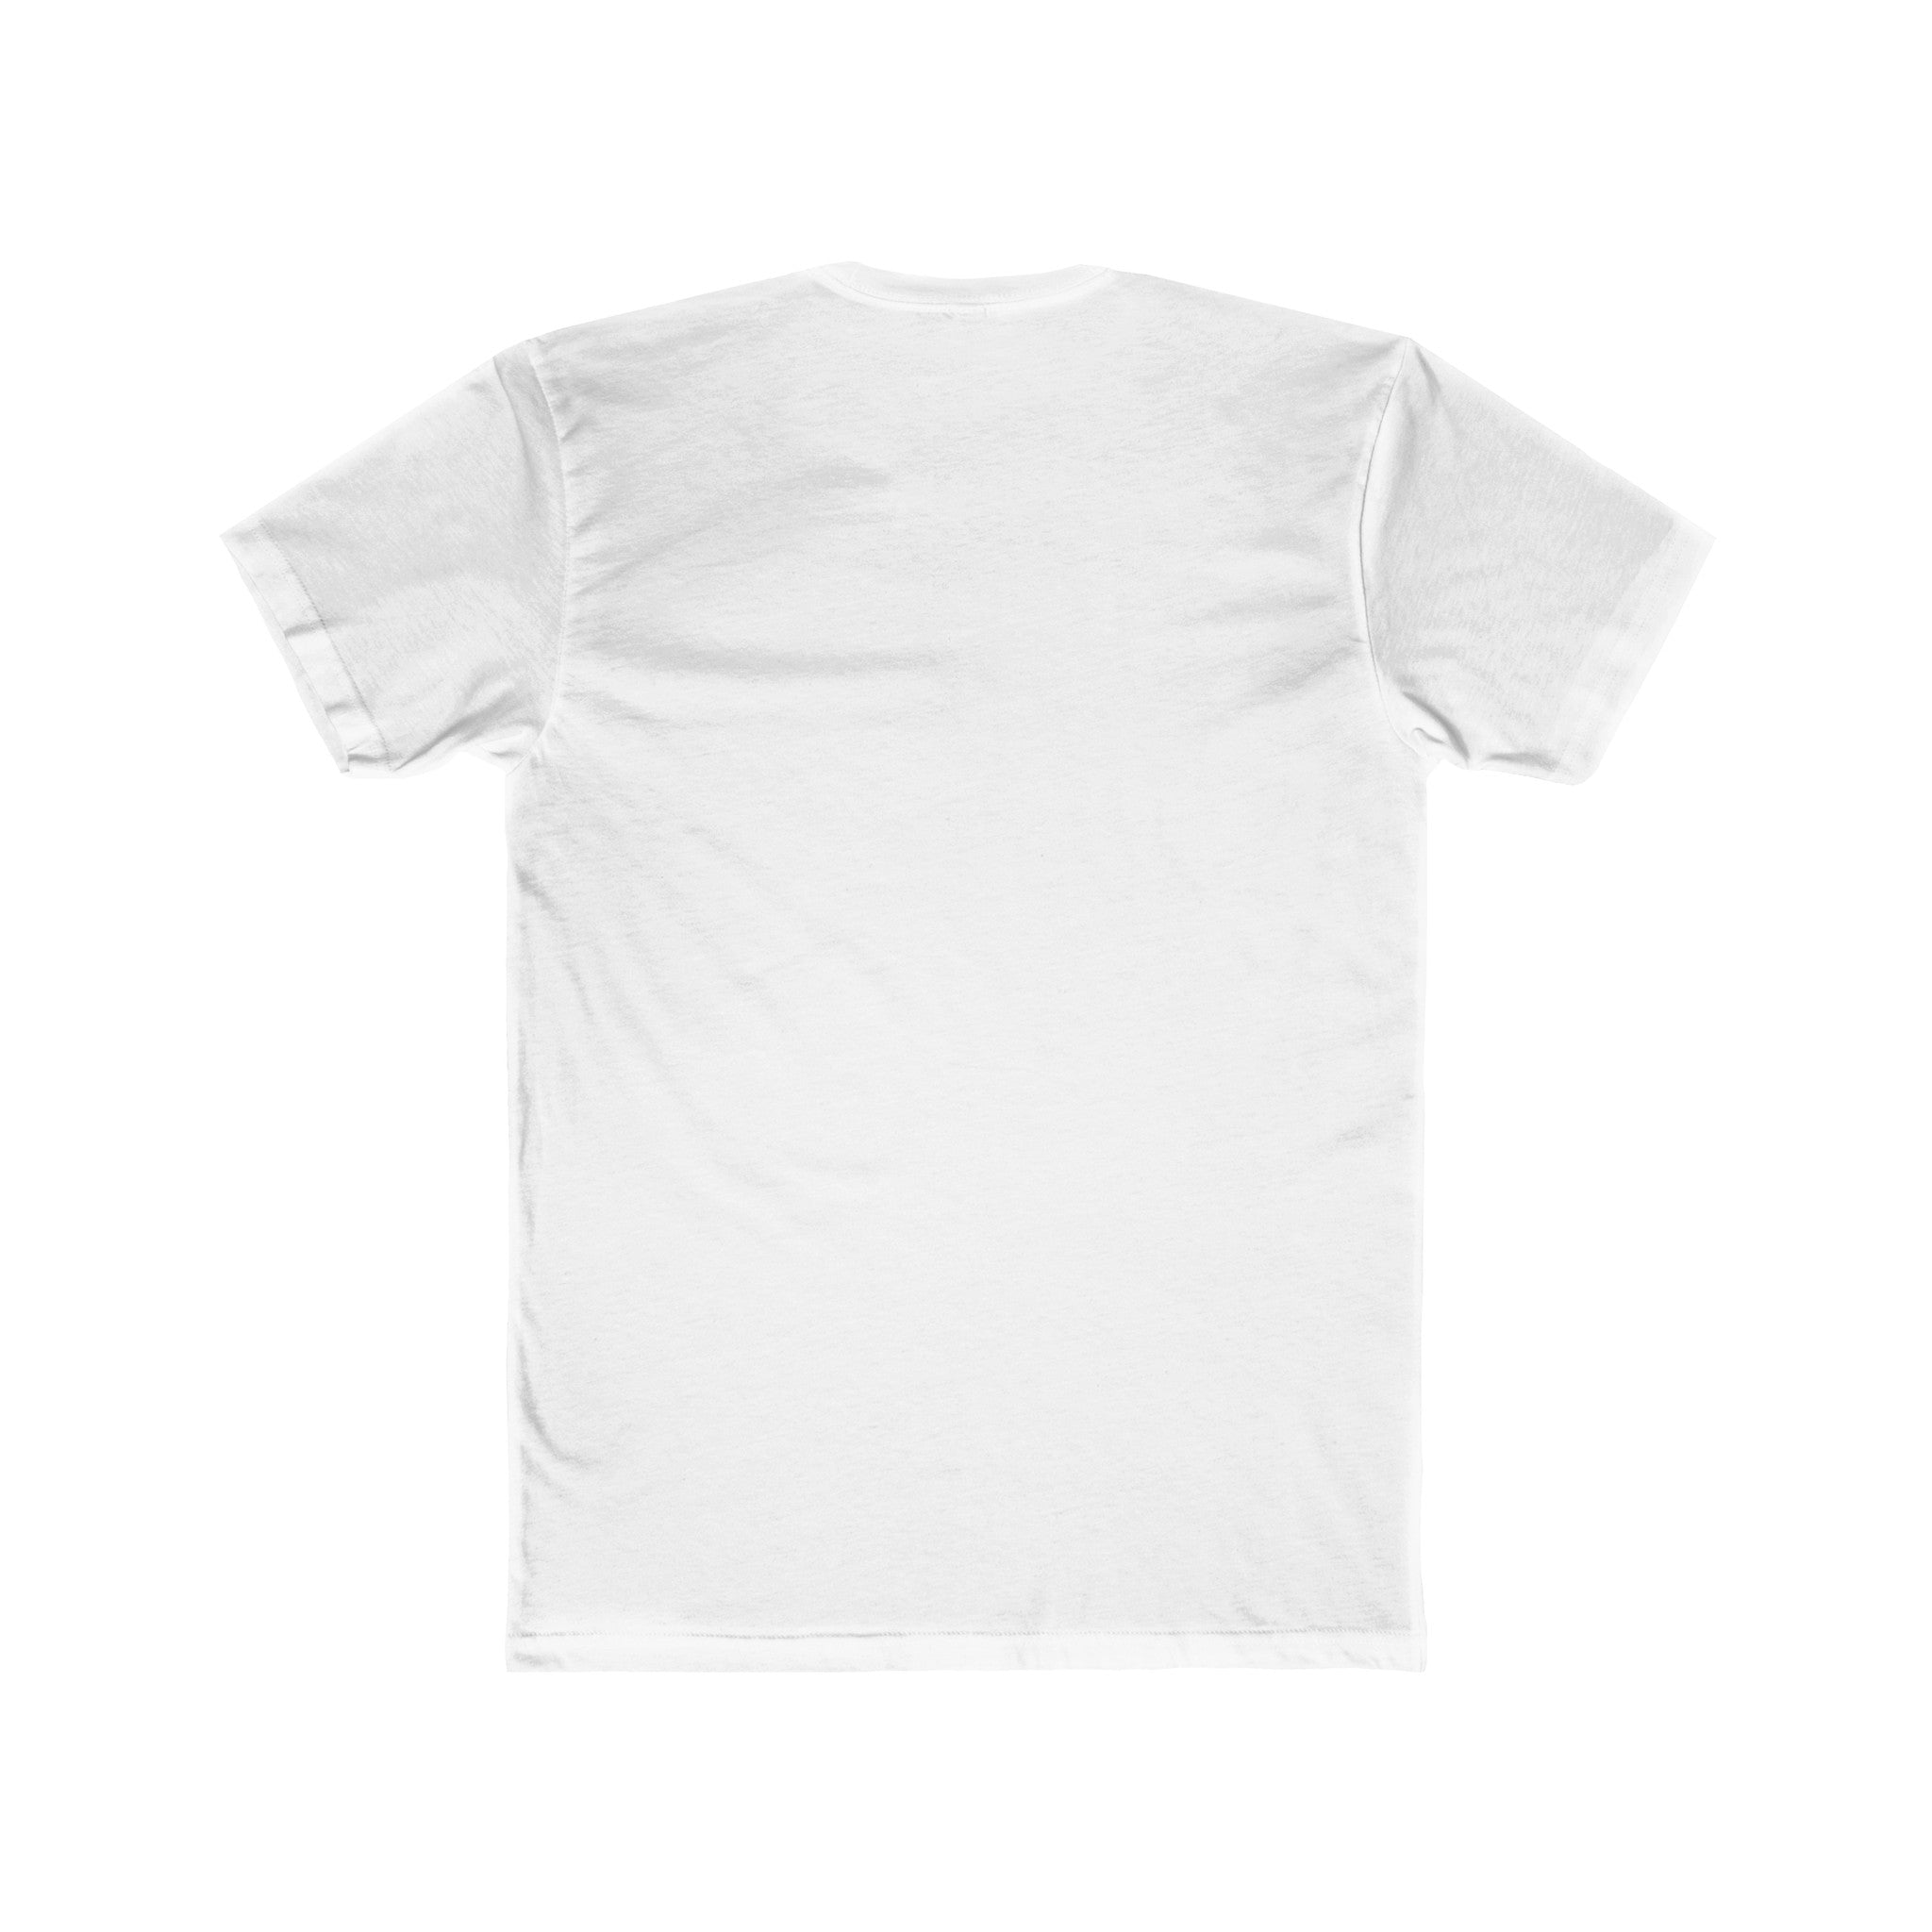 Mac 10 T-Shirt White Quickstrike